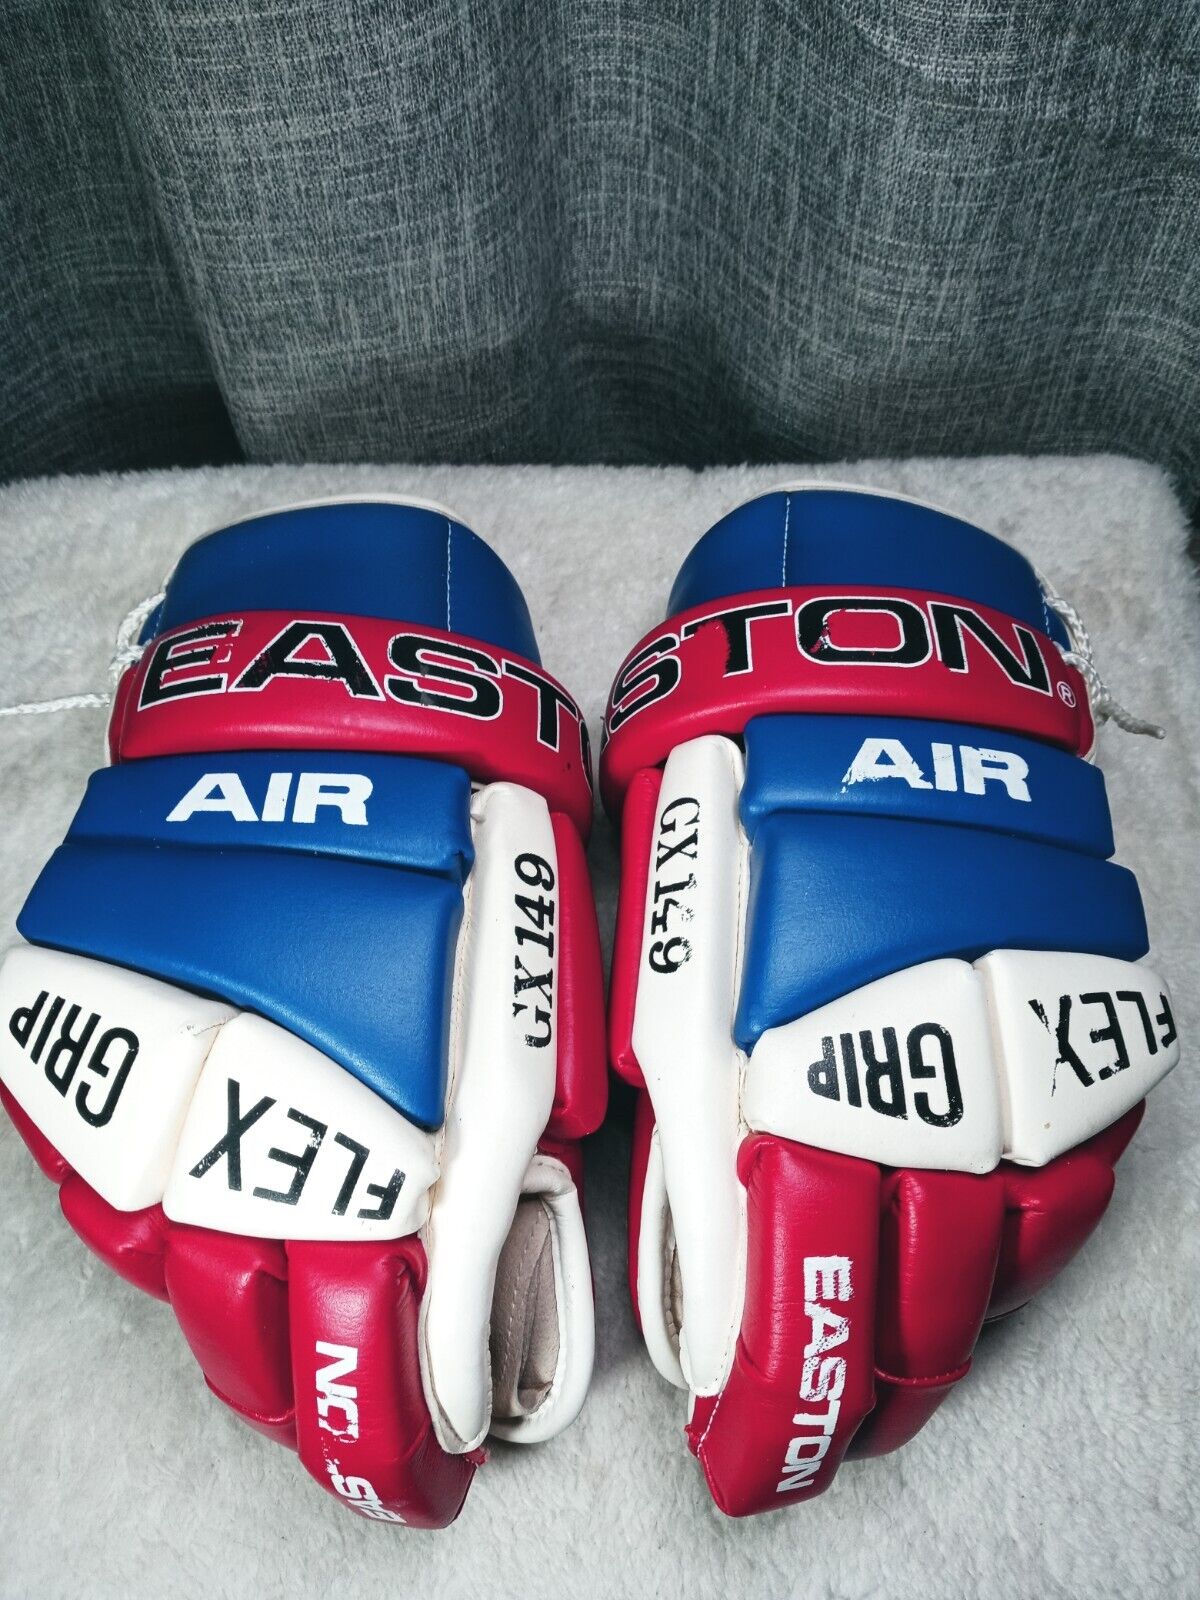 Easton Air Flex Grip Gx149 Hockey Gloves Size 14" Tri Colored Red Blue White